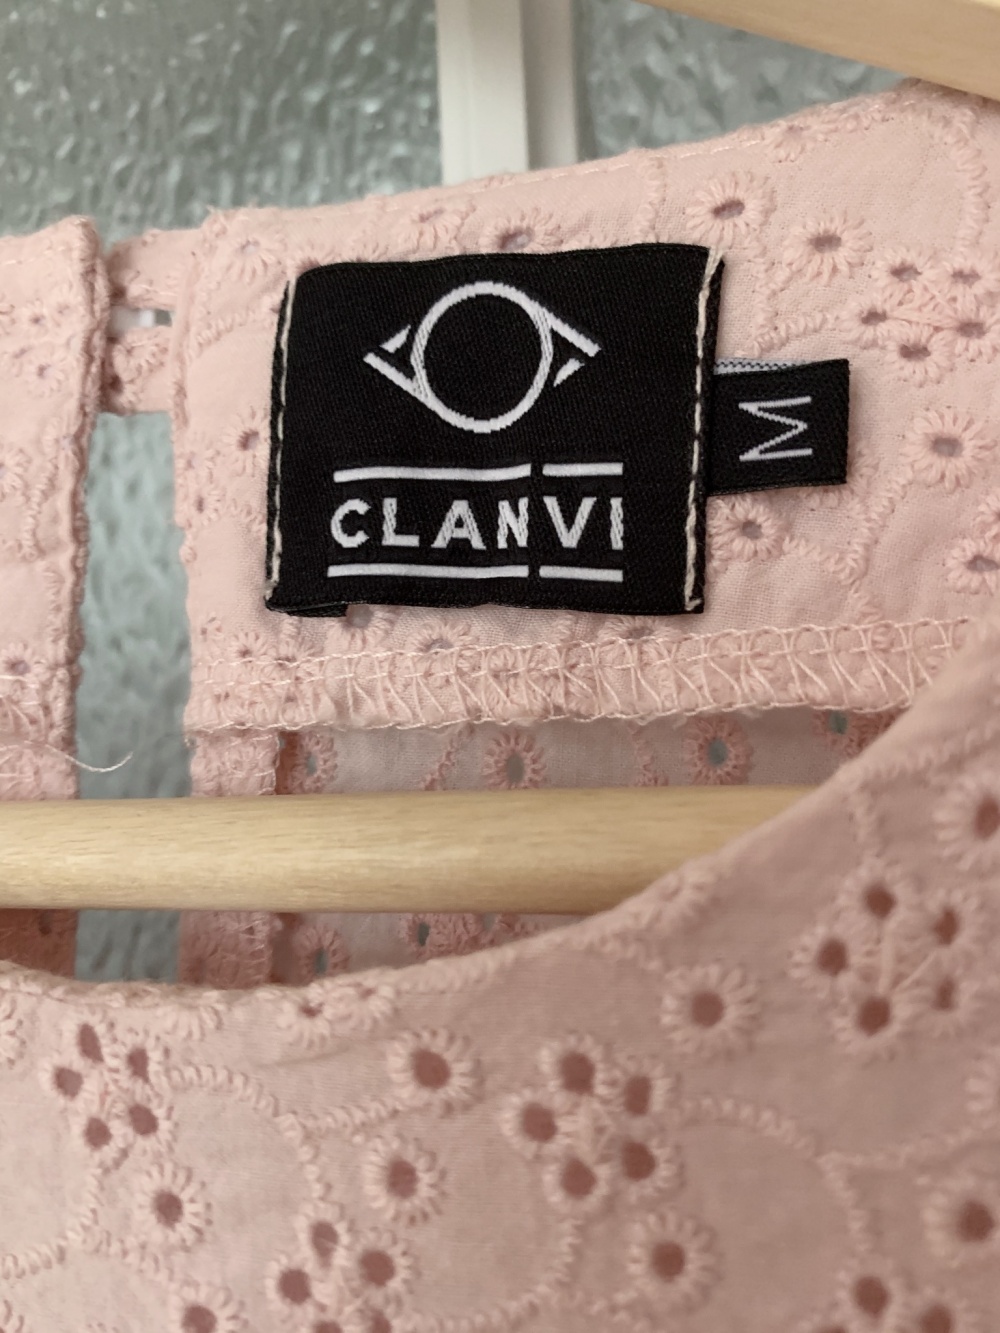 Платье Clan VI (clan 6), one size